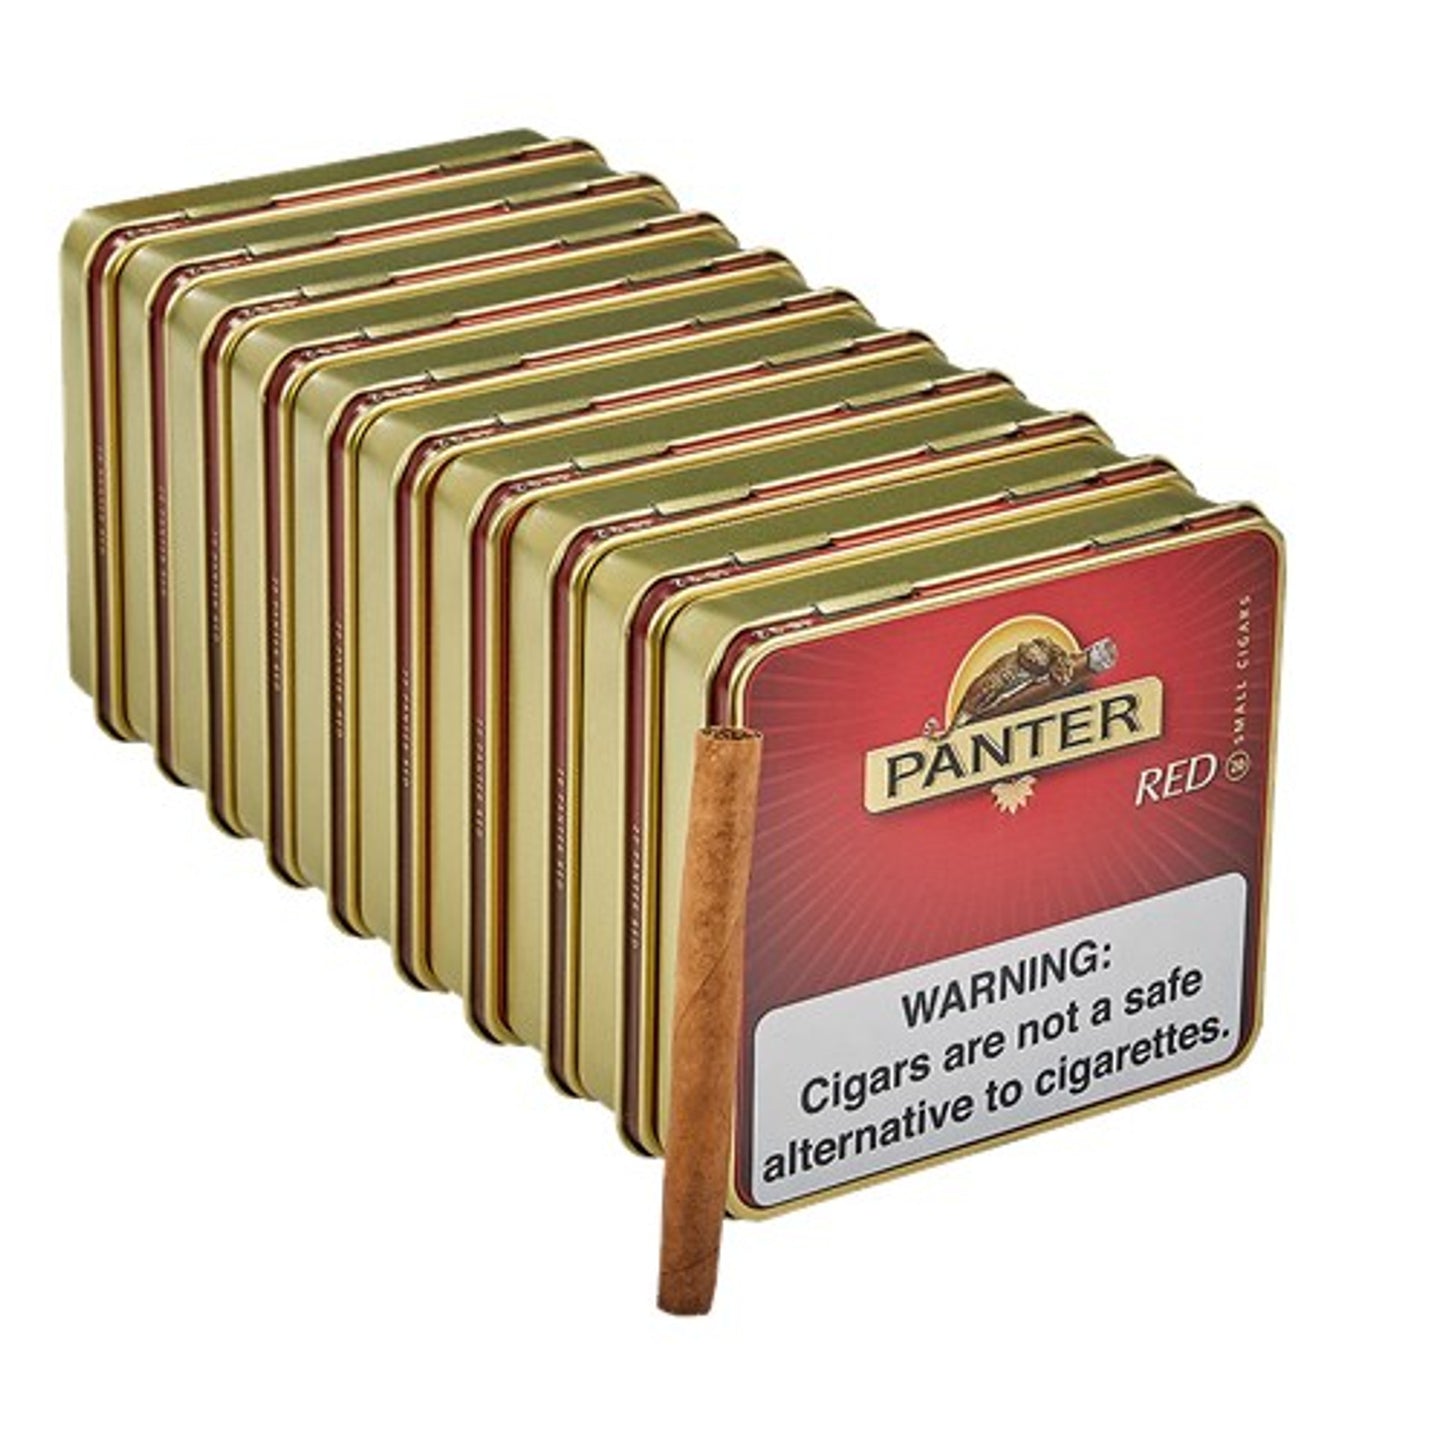 Panter Red Small Cigars (10 Packs of 20 Cigars)